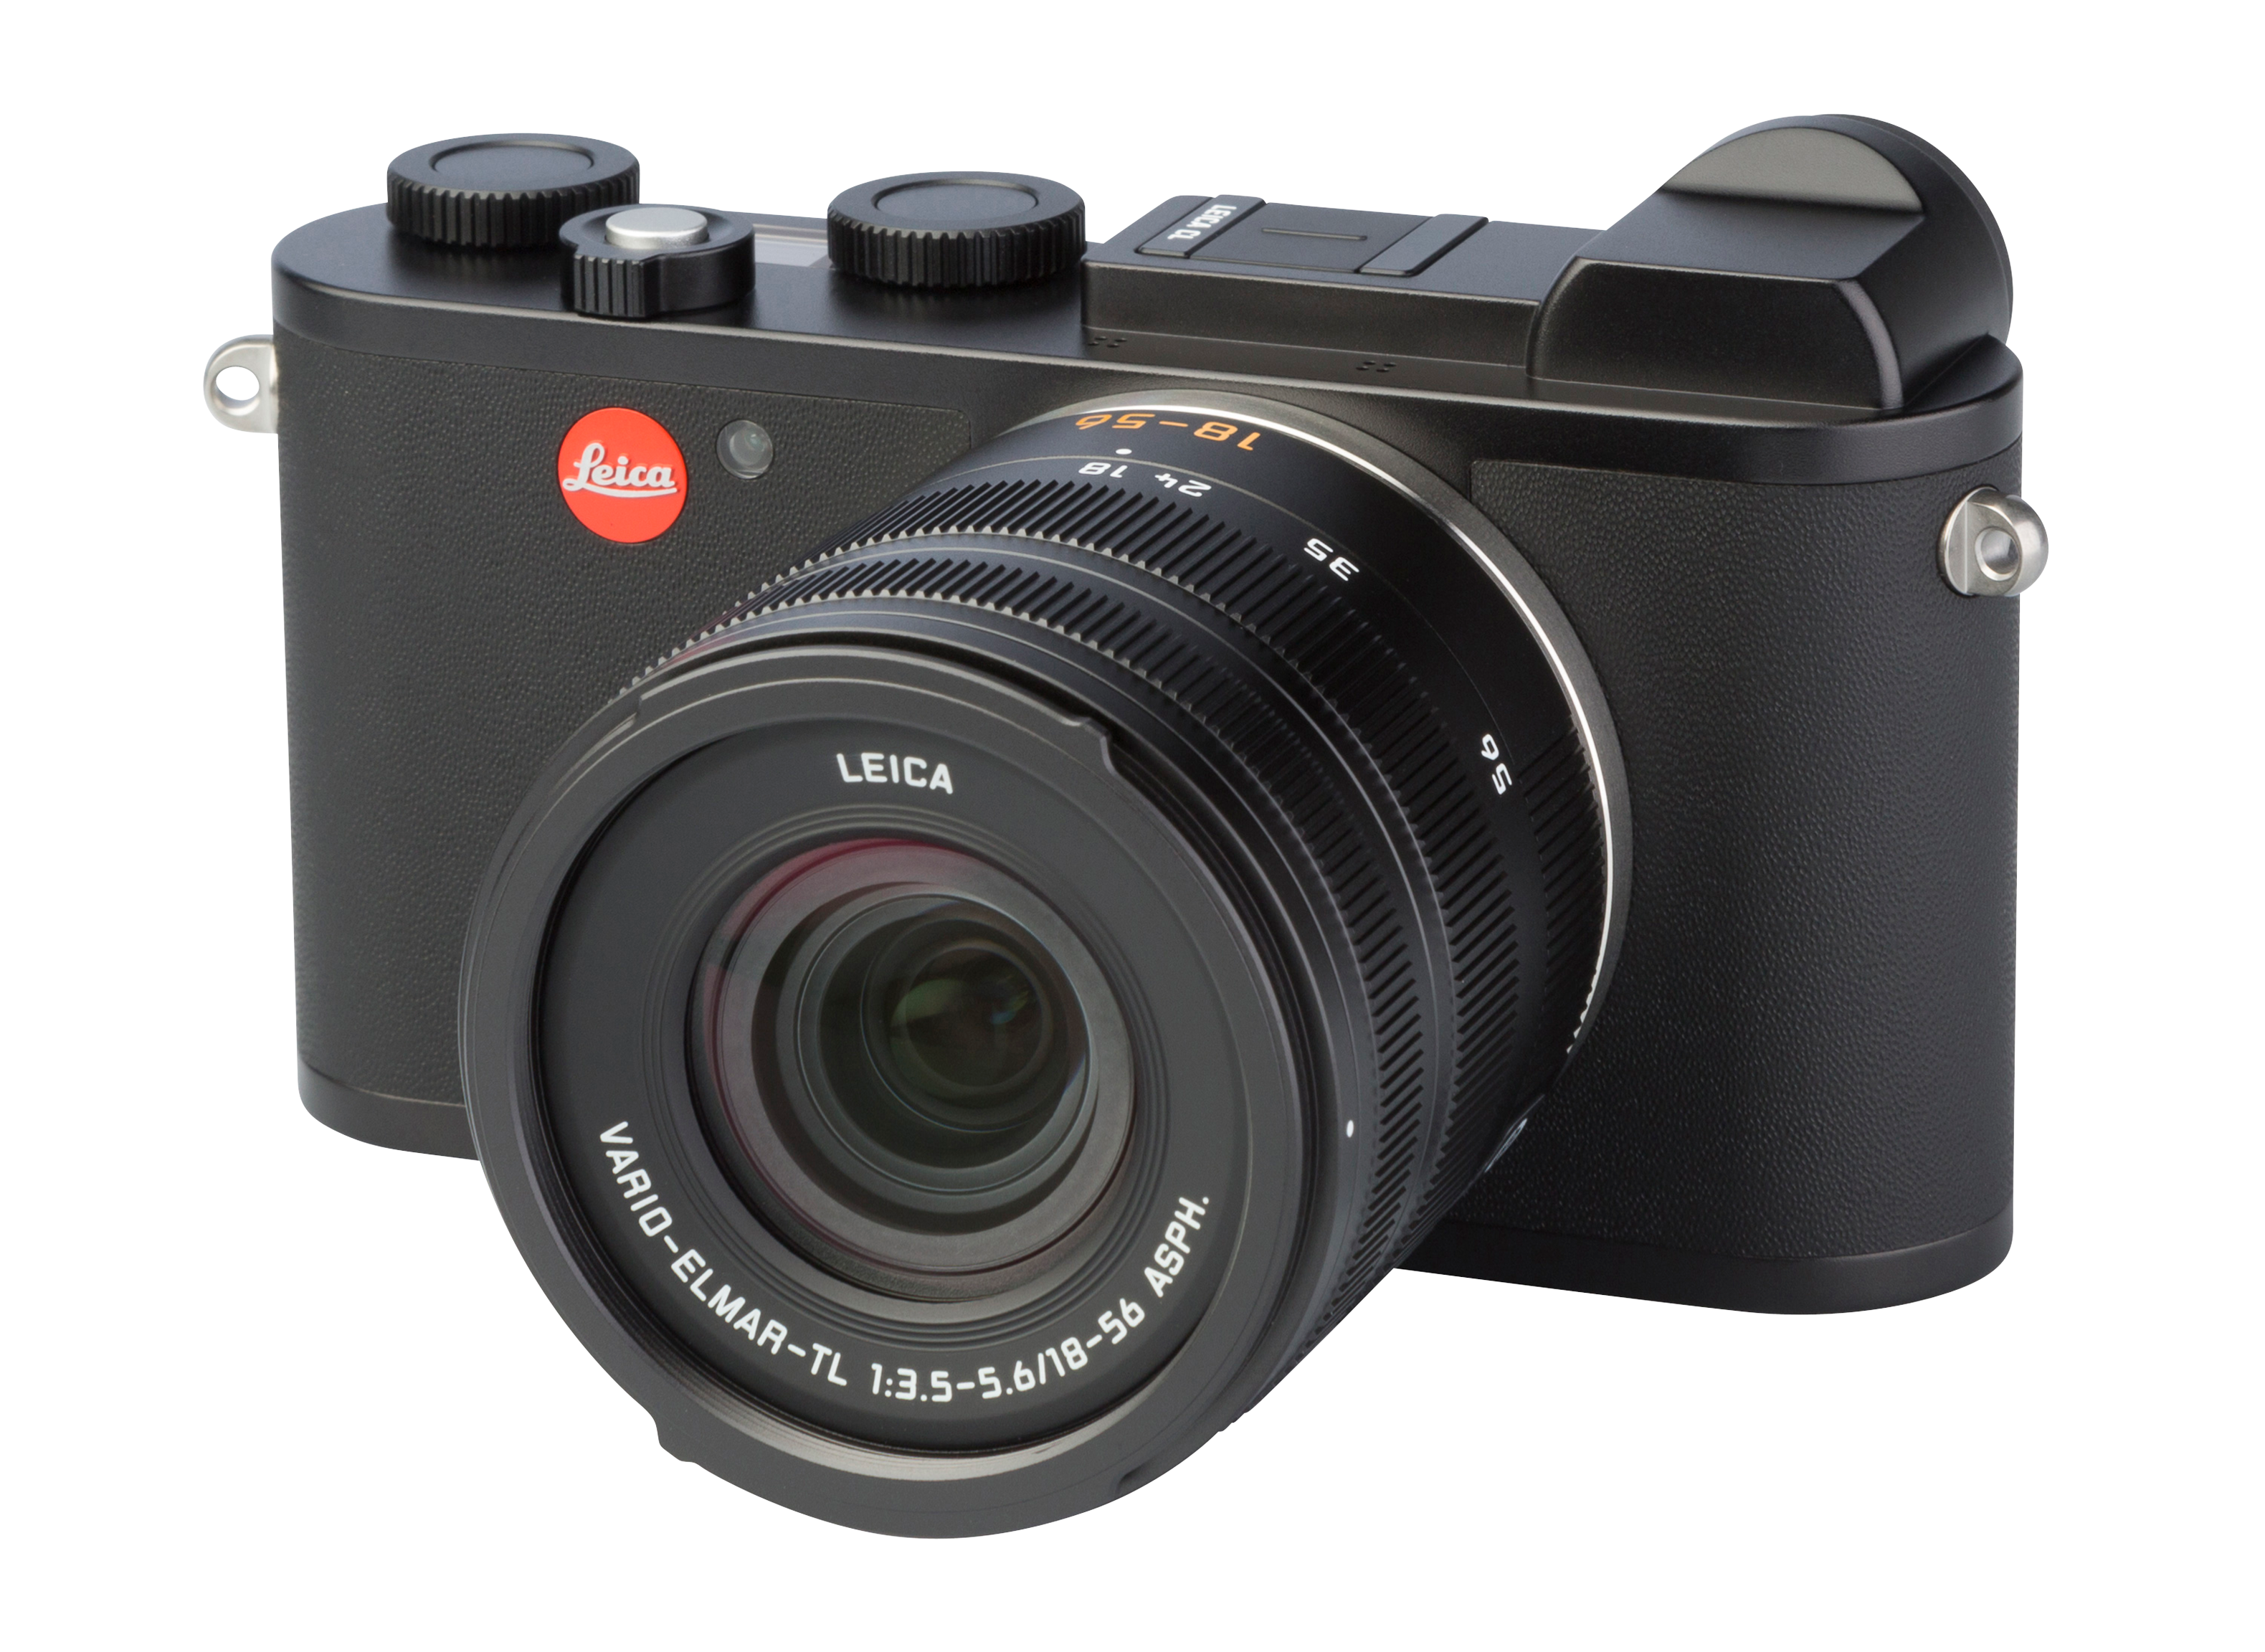 koppeling karakter opslaan Leica CL w/ 18-56mm Camera - Consumer Reports